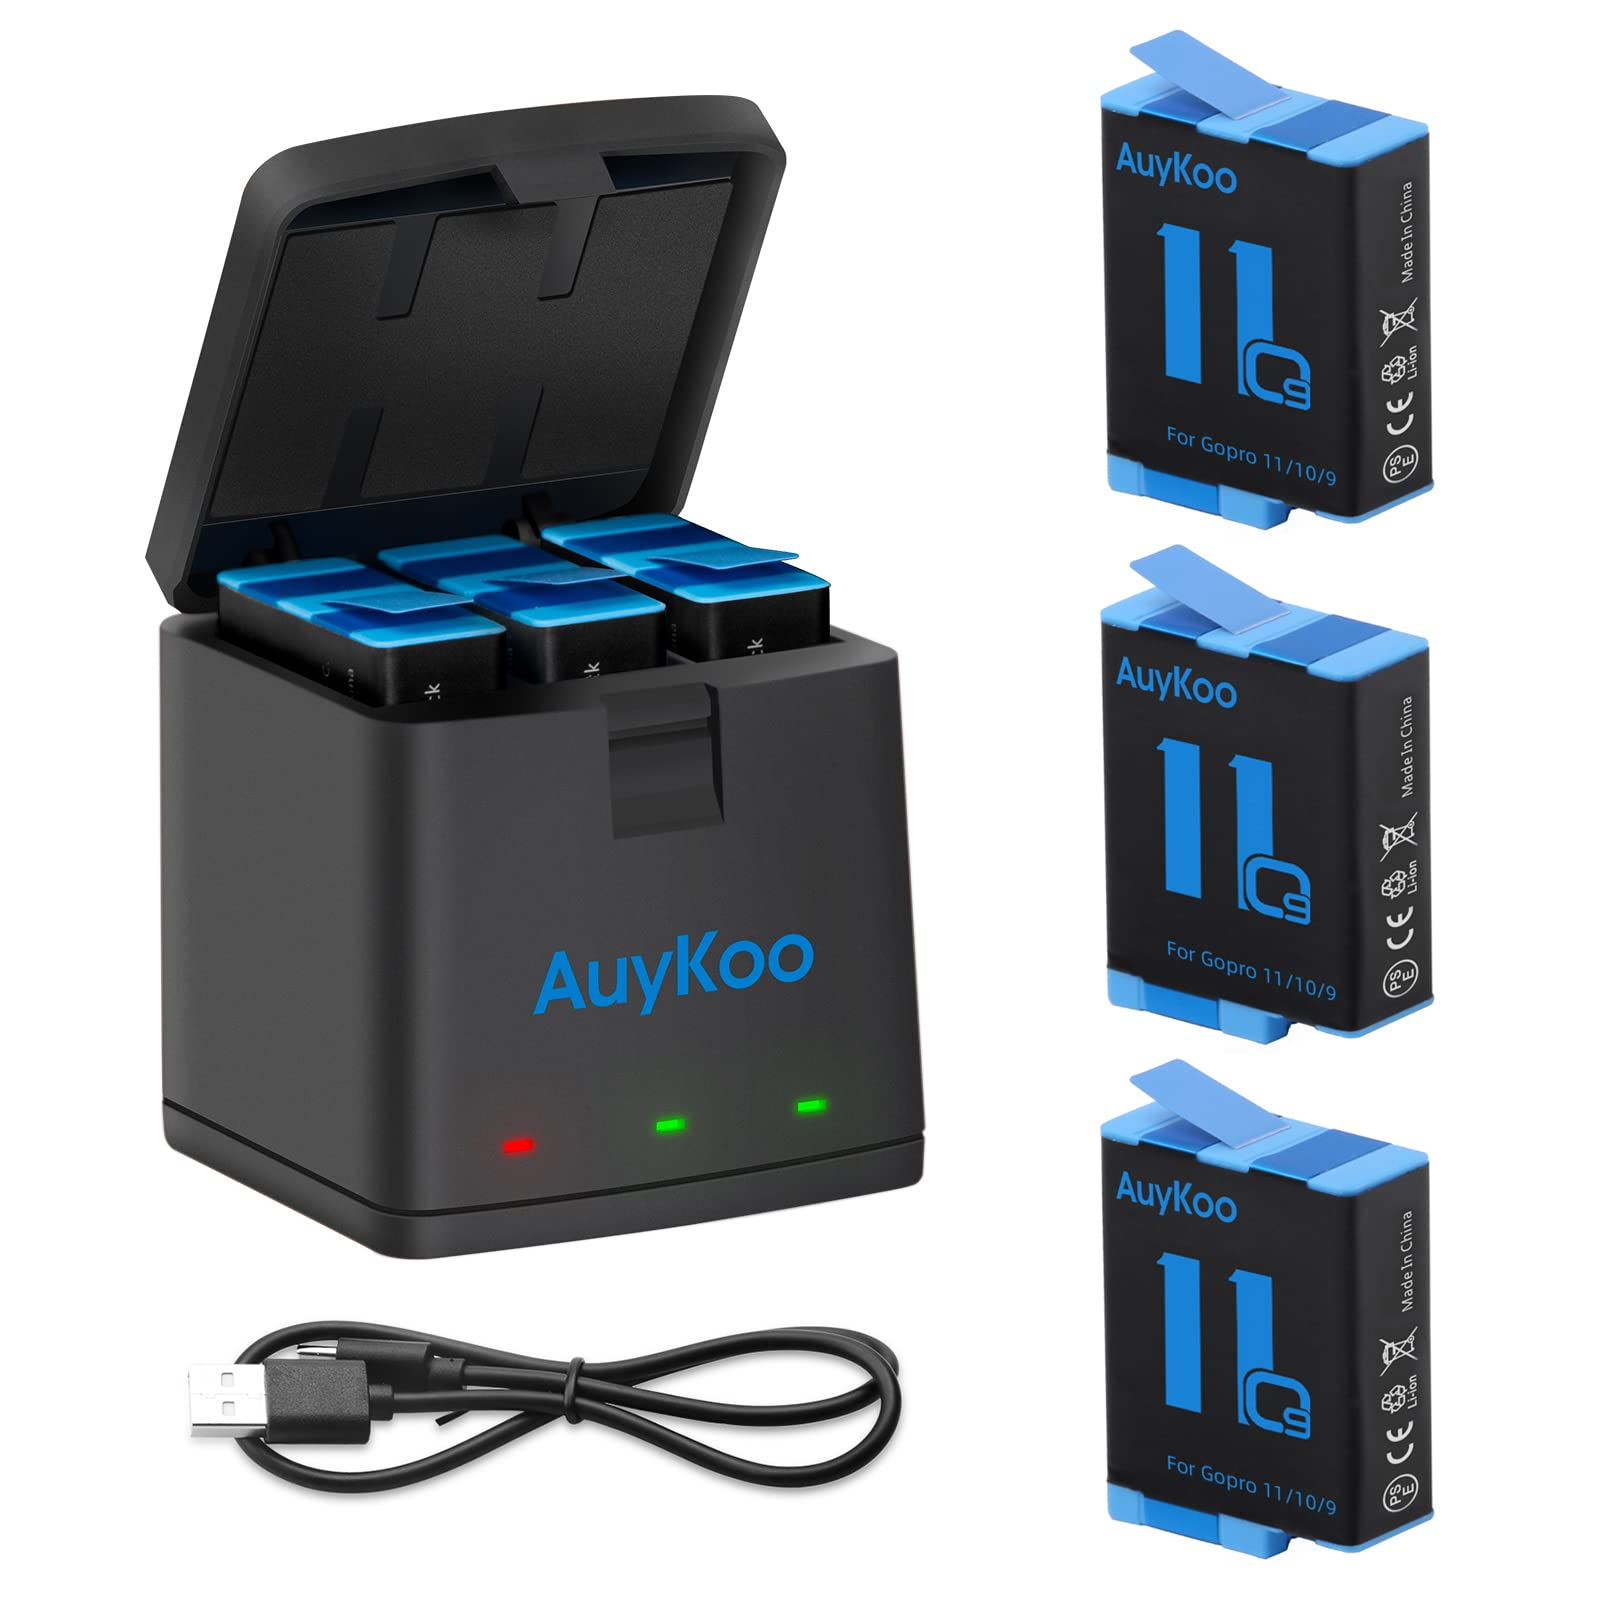 AuyKoo Akku Ladegerät für GoPro Hero 9 Black Hero 10 Black Hero 11 Black, Ersatzakku 3 Stück + 3-Kanal Ladegerät USB + Type C Kabel für GoPro Hero 9 10 11 Schwarz Kamera Camcorder